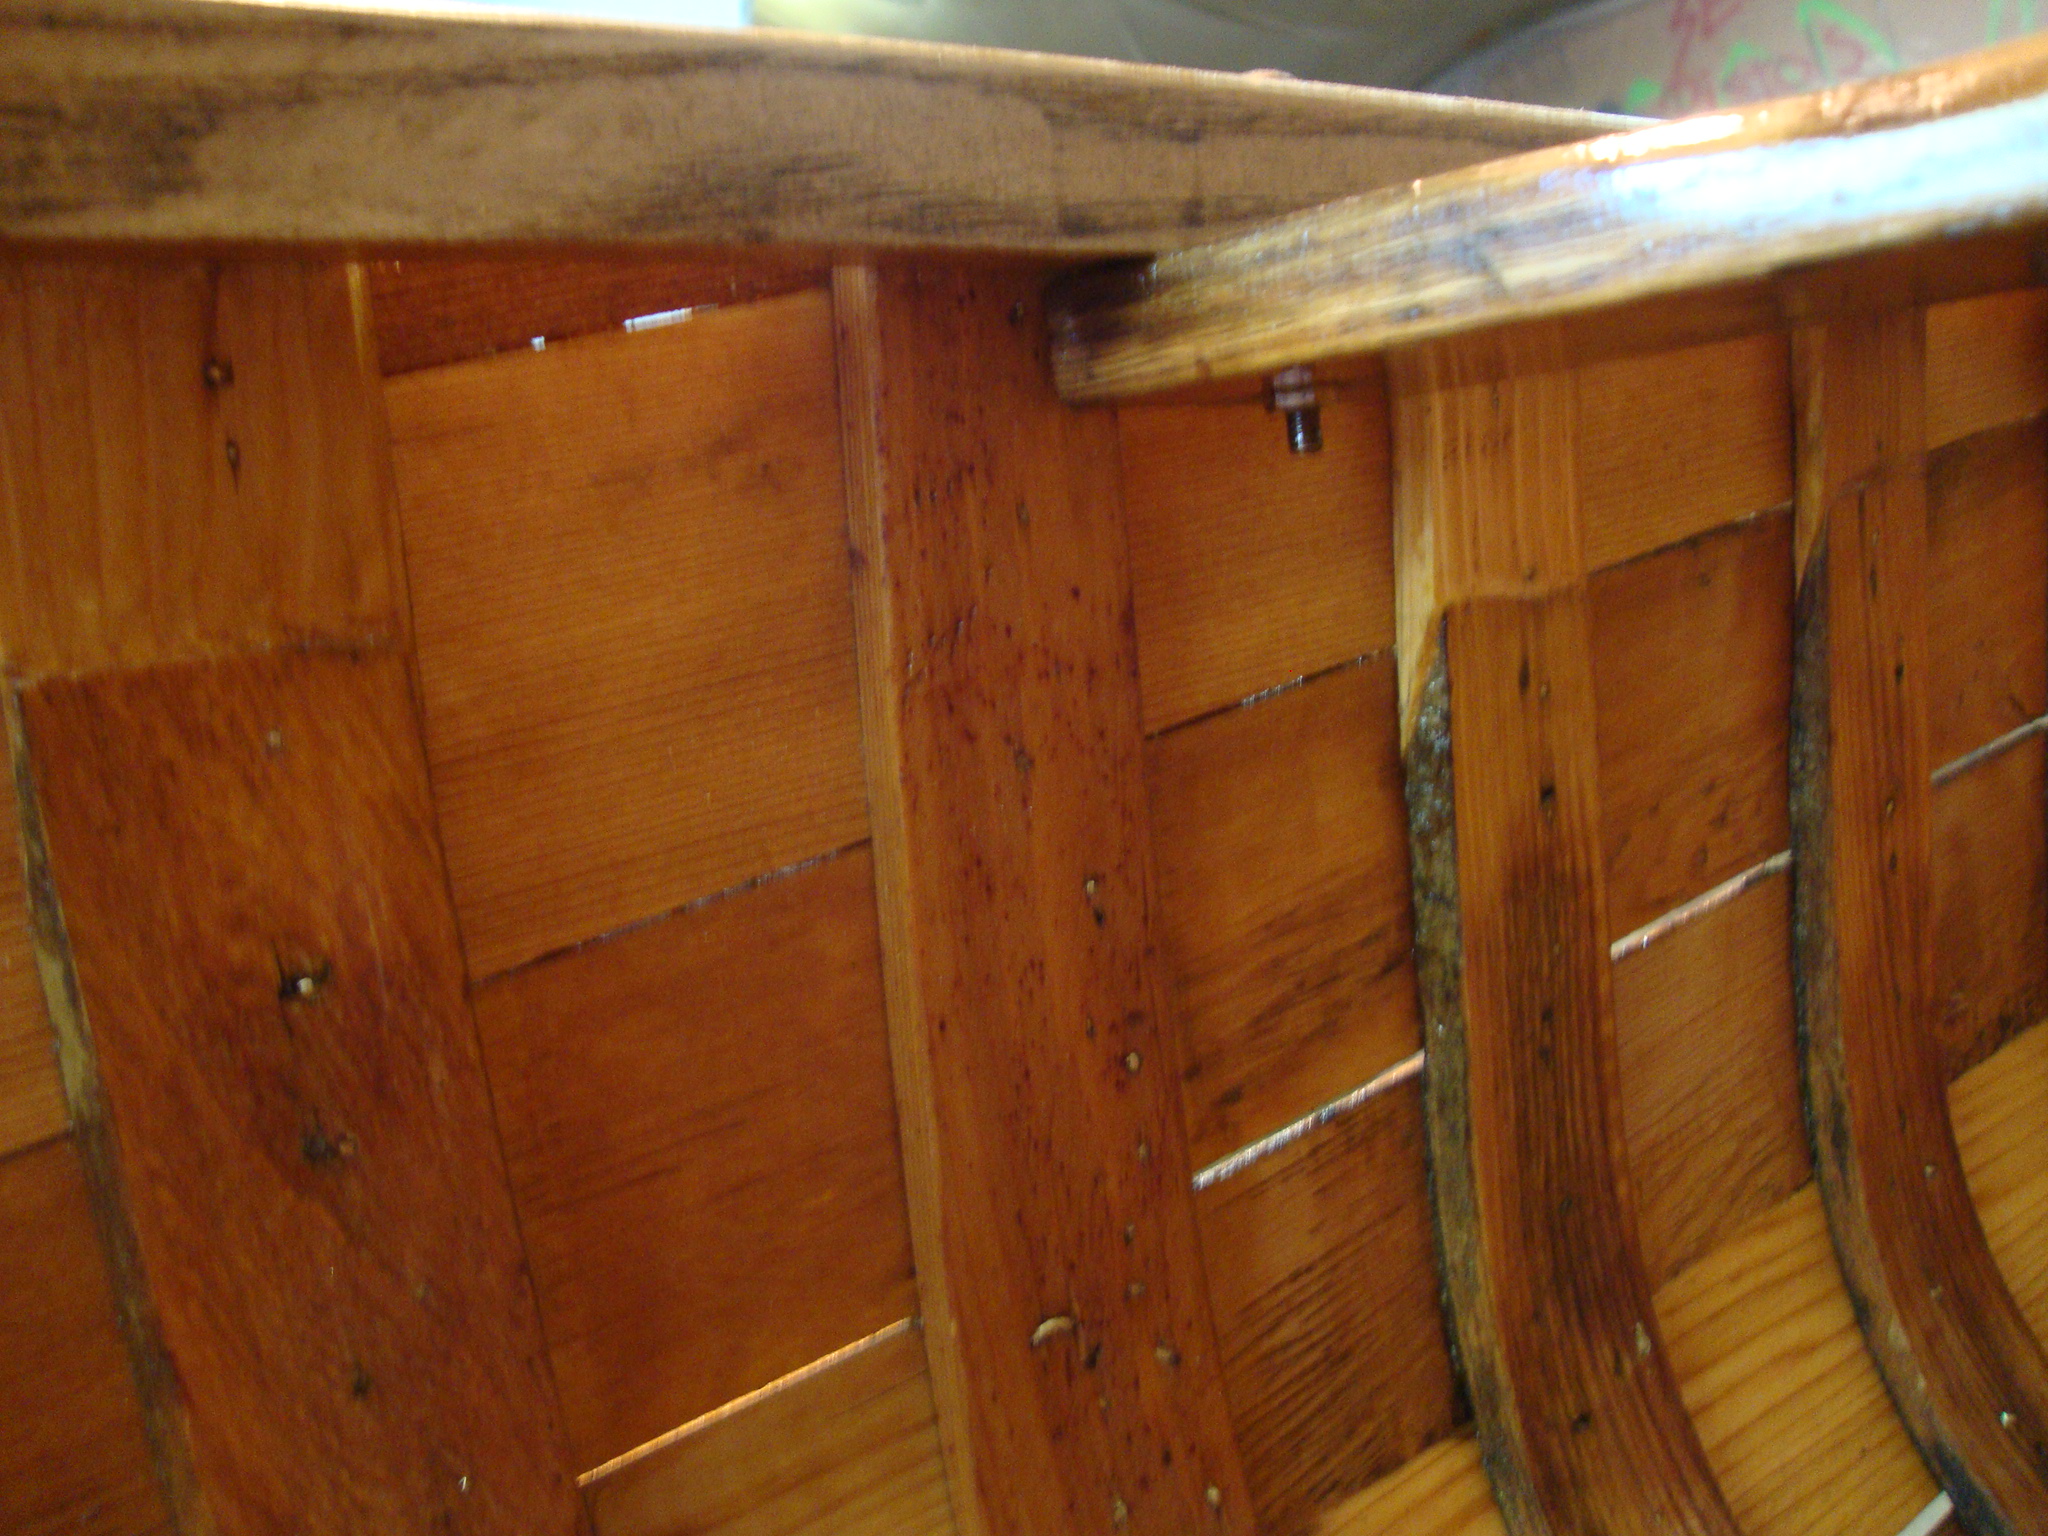 wooden canoe restoration | Canoeguy's Blog | Page 2